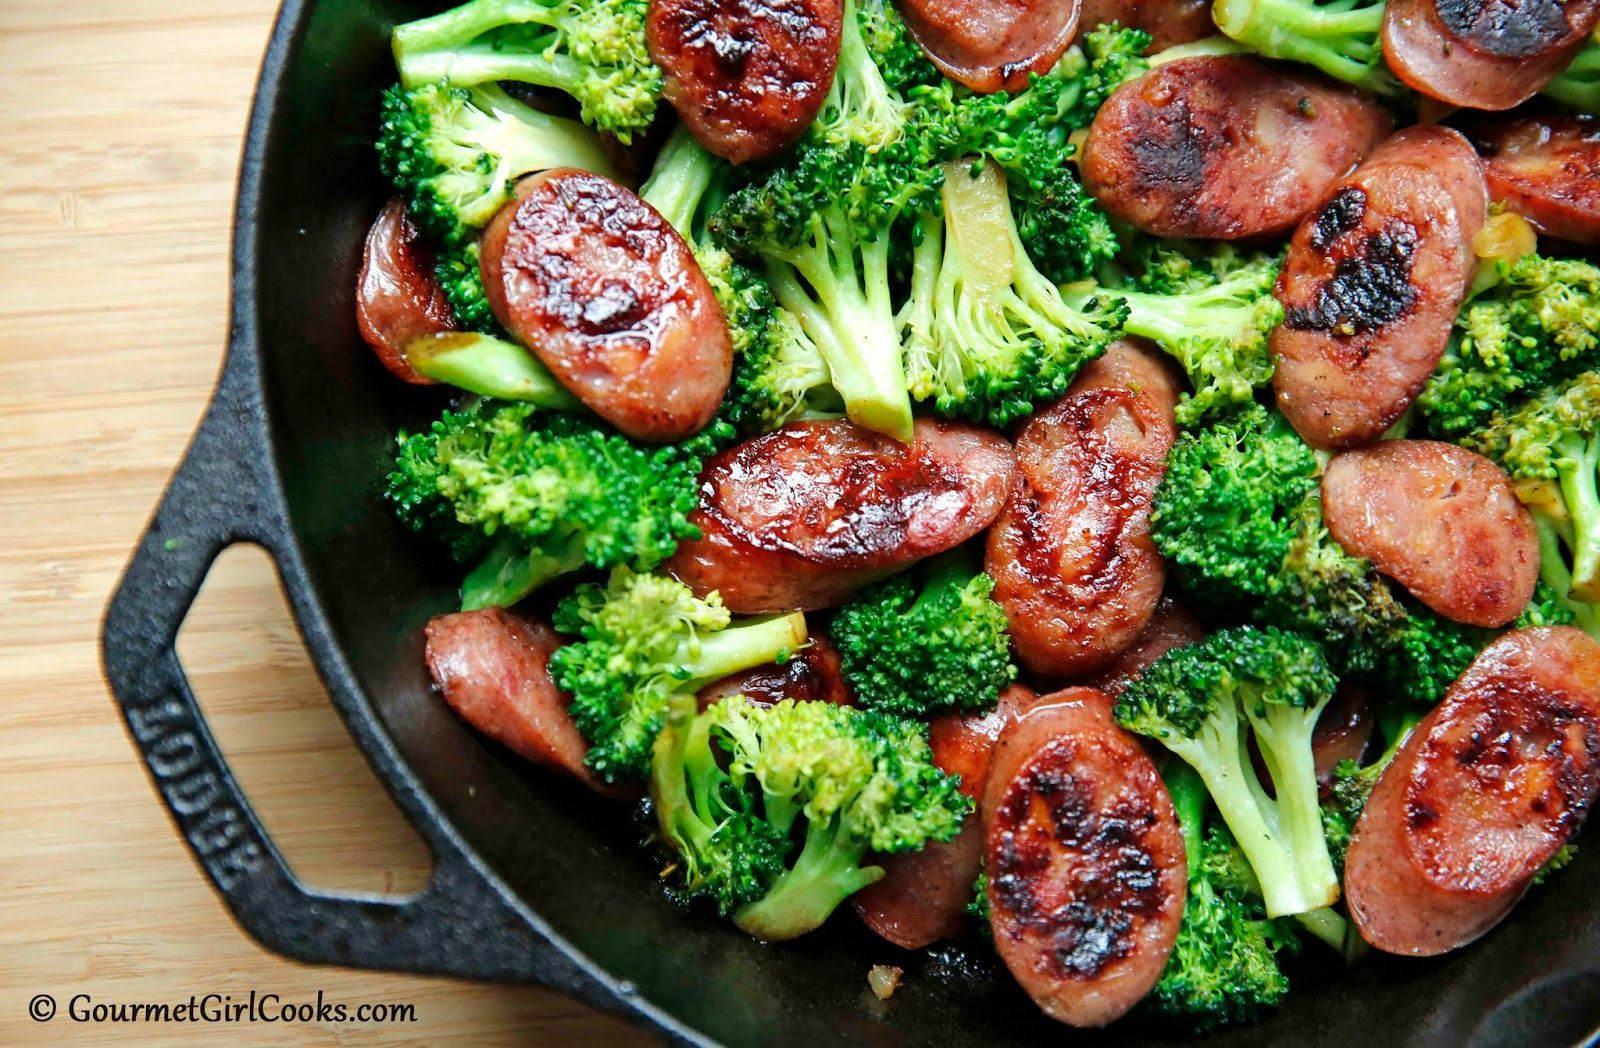 Low Carb Gourmet Recipes
 Sausage & Broccoli Quick Easy Low Carb